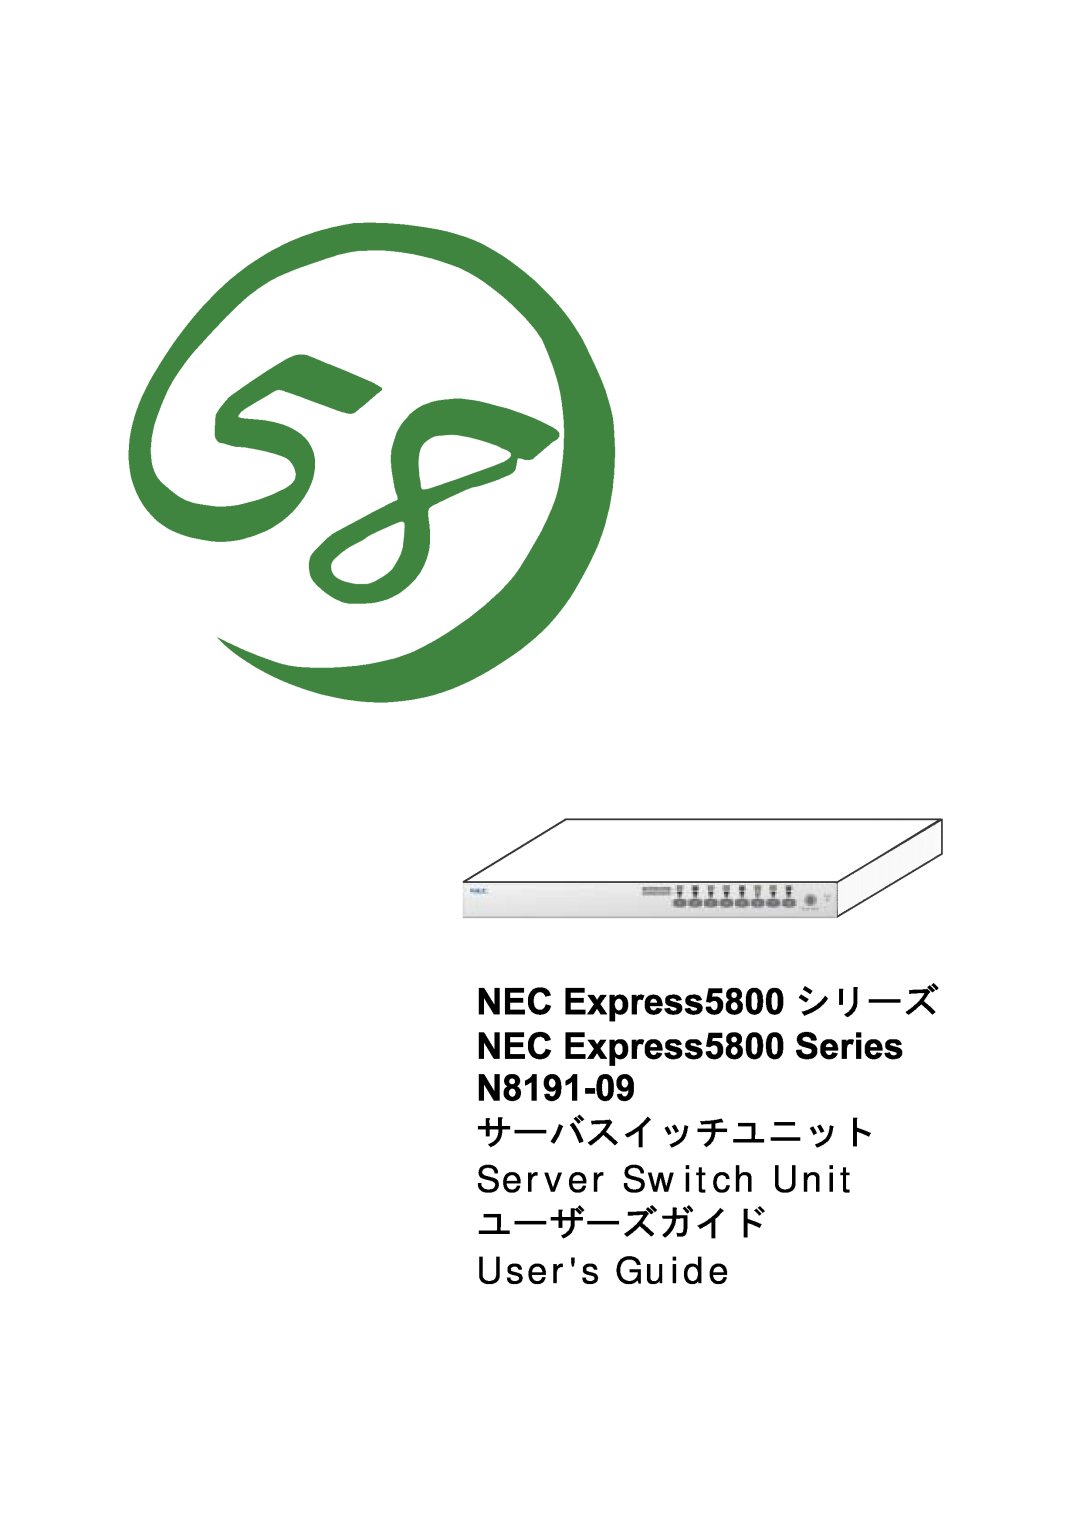 NEC N8191-09 manual シリーズ サーバスイッチユニット Server Switch Unit ユーザーズガイド, Users Guide 